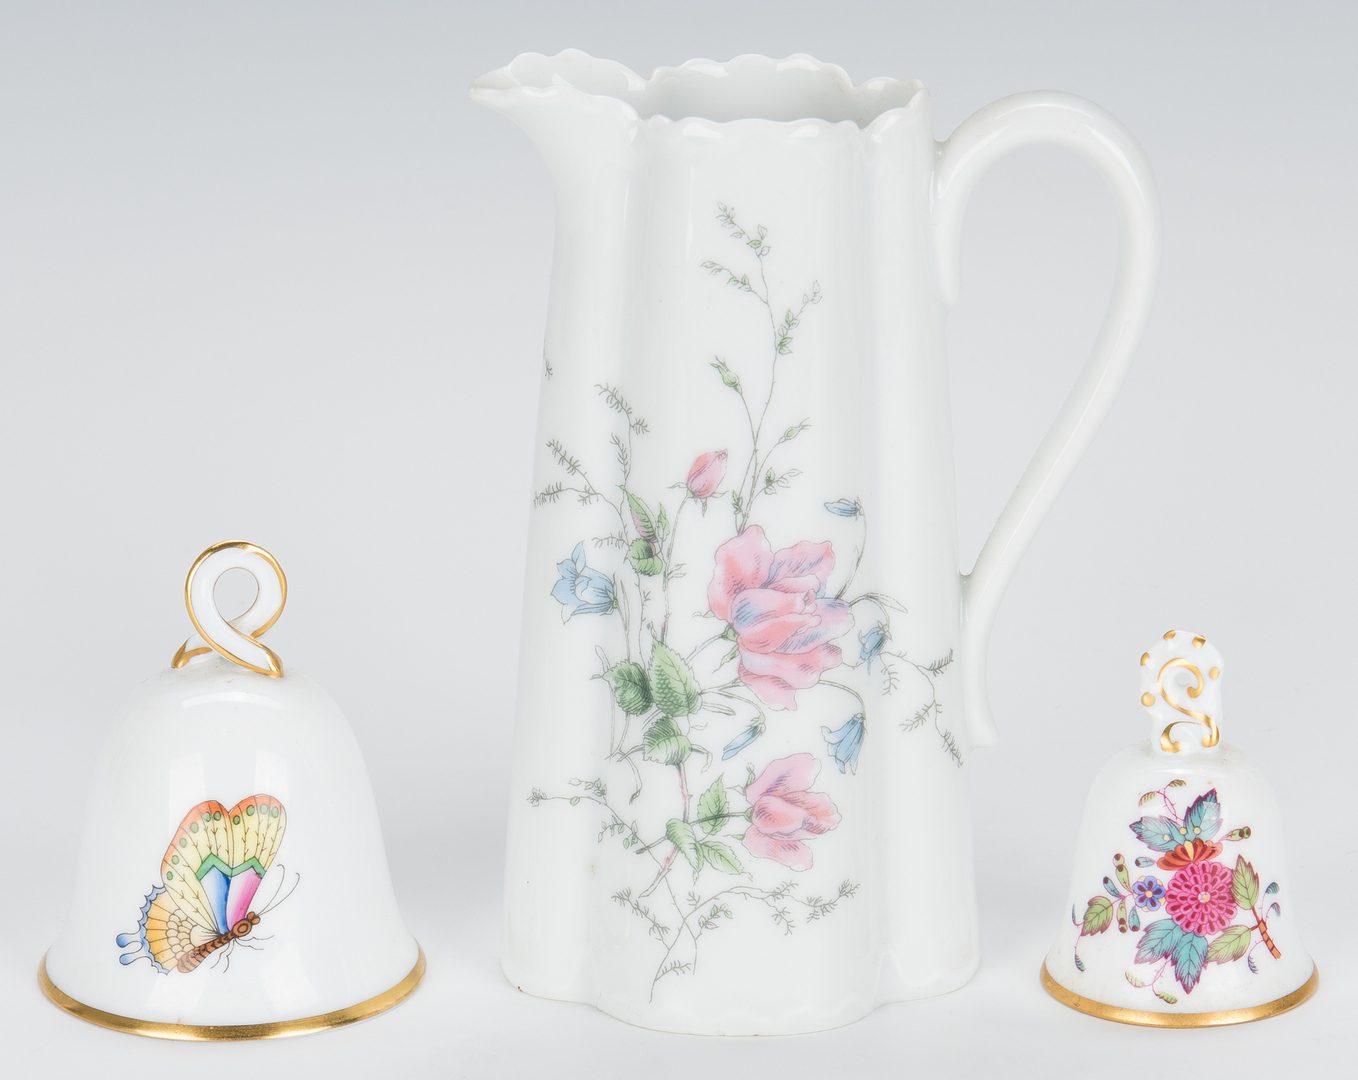 Lot 333: 21 Assorted American & European Porcelain Items